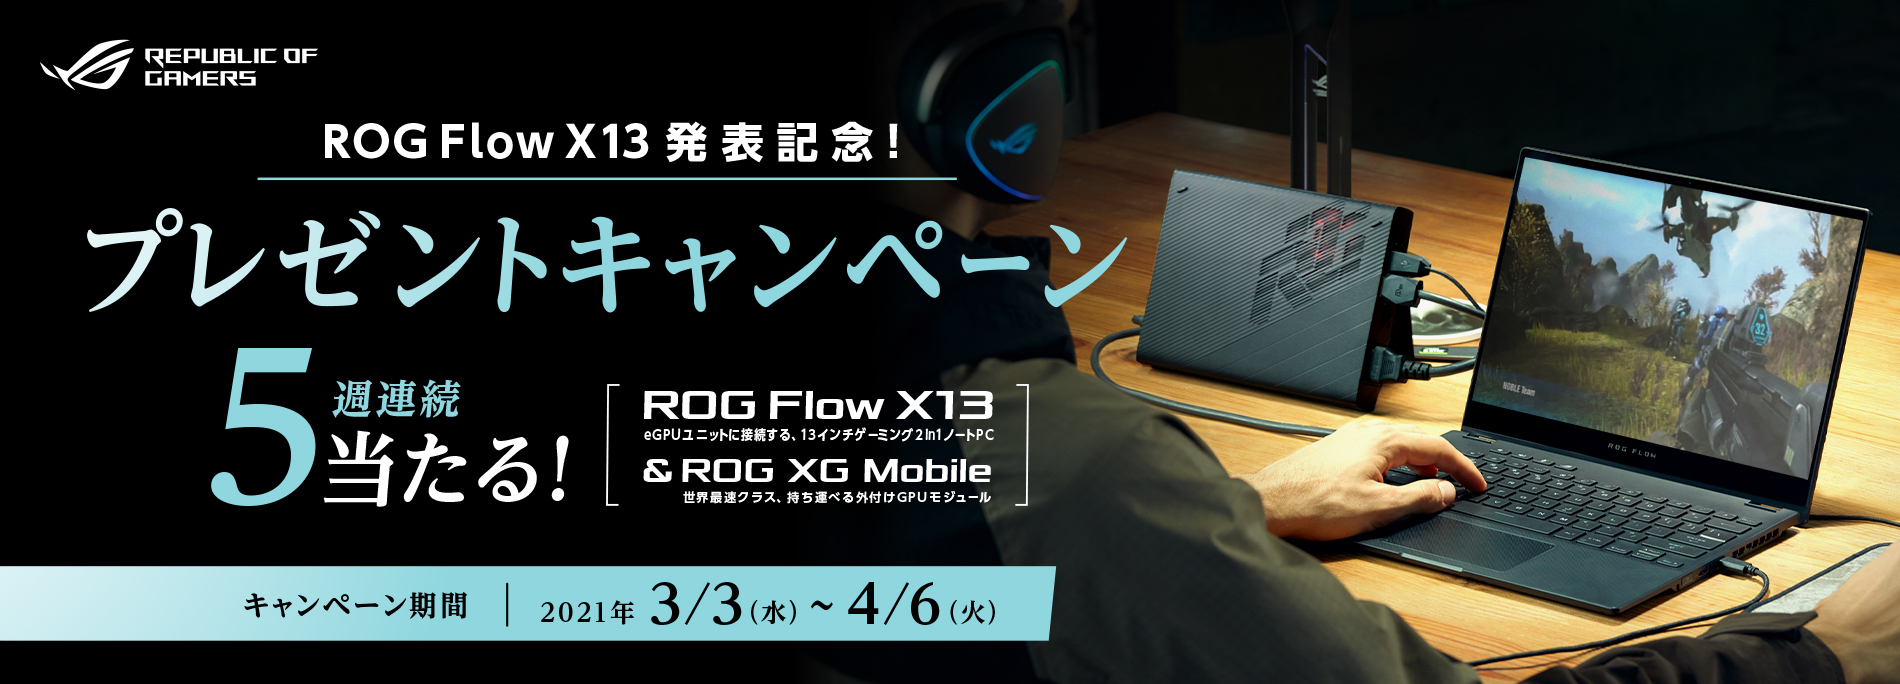 ASUS Event -ROG Flow X13発表記念!プレゼントキャンペーン